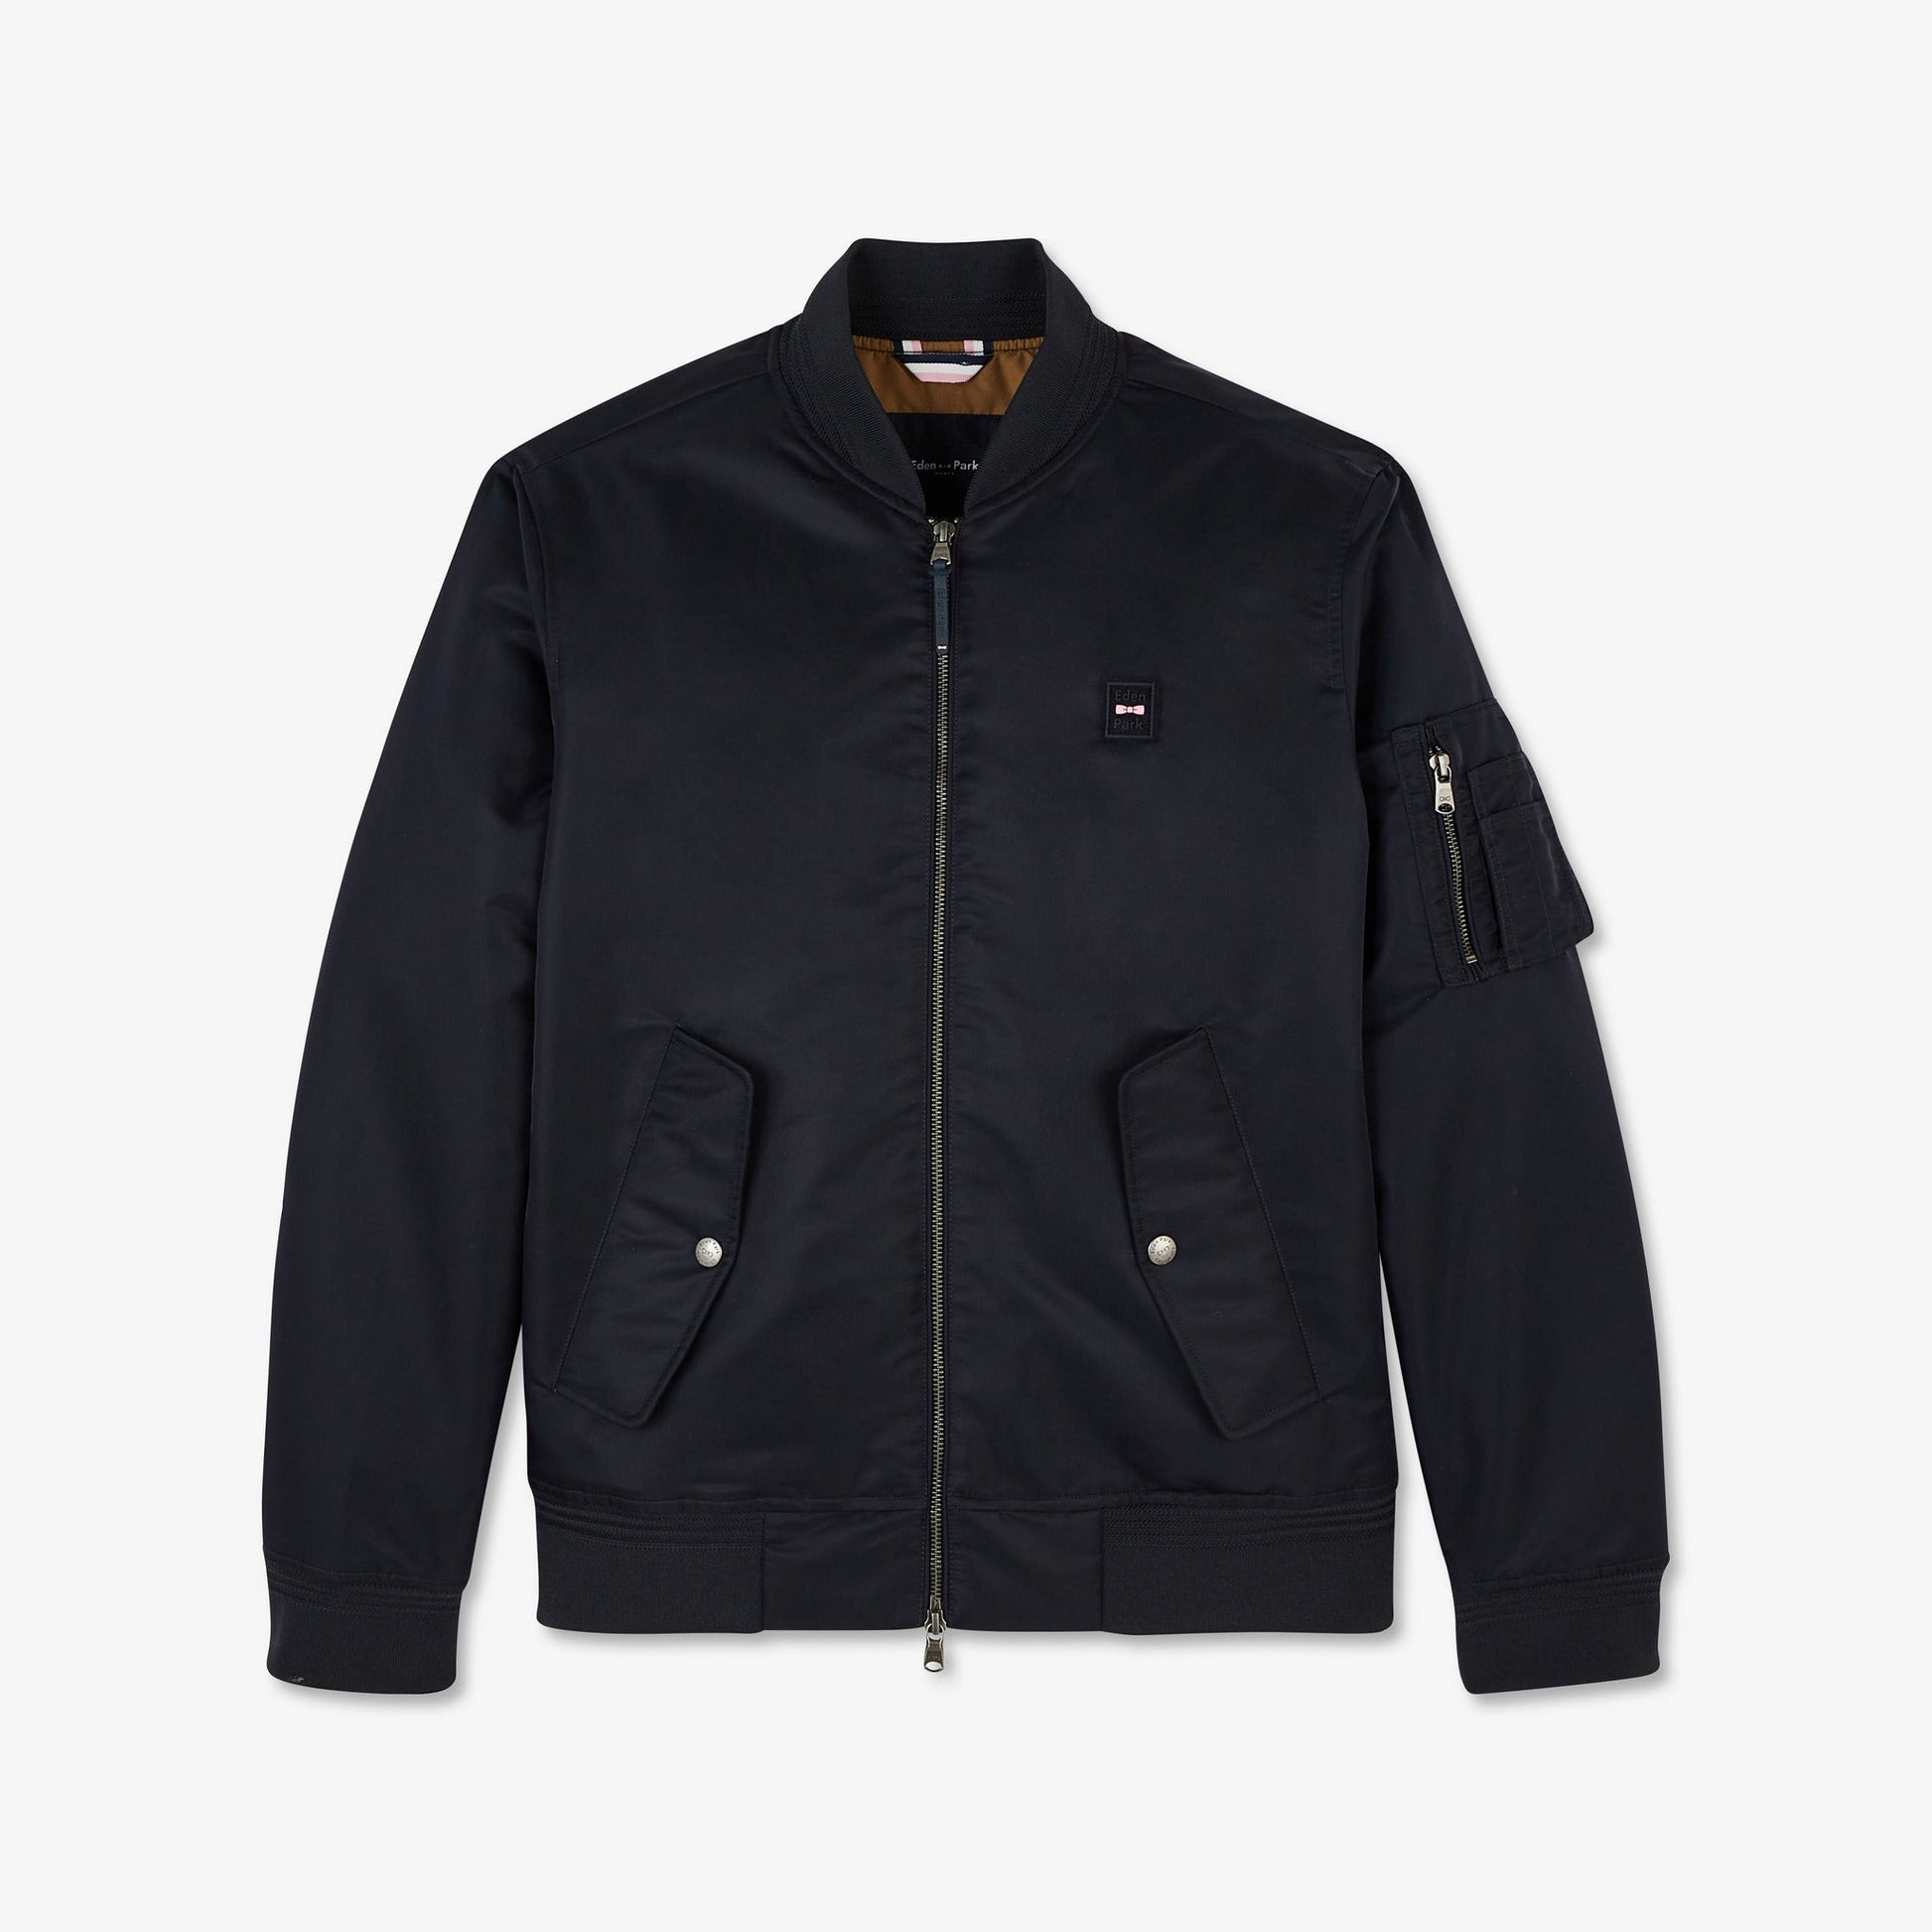 Travolta Black Leather Jacket – Sims Leather